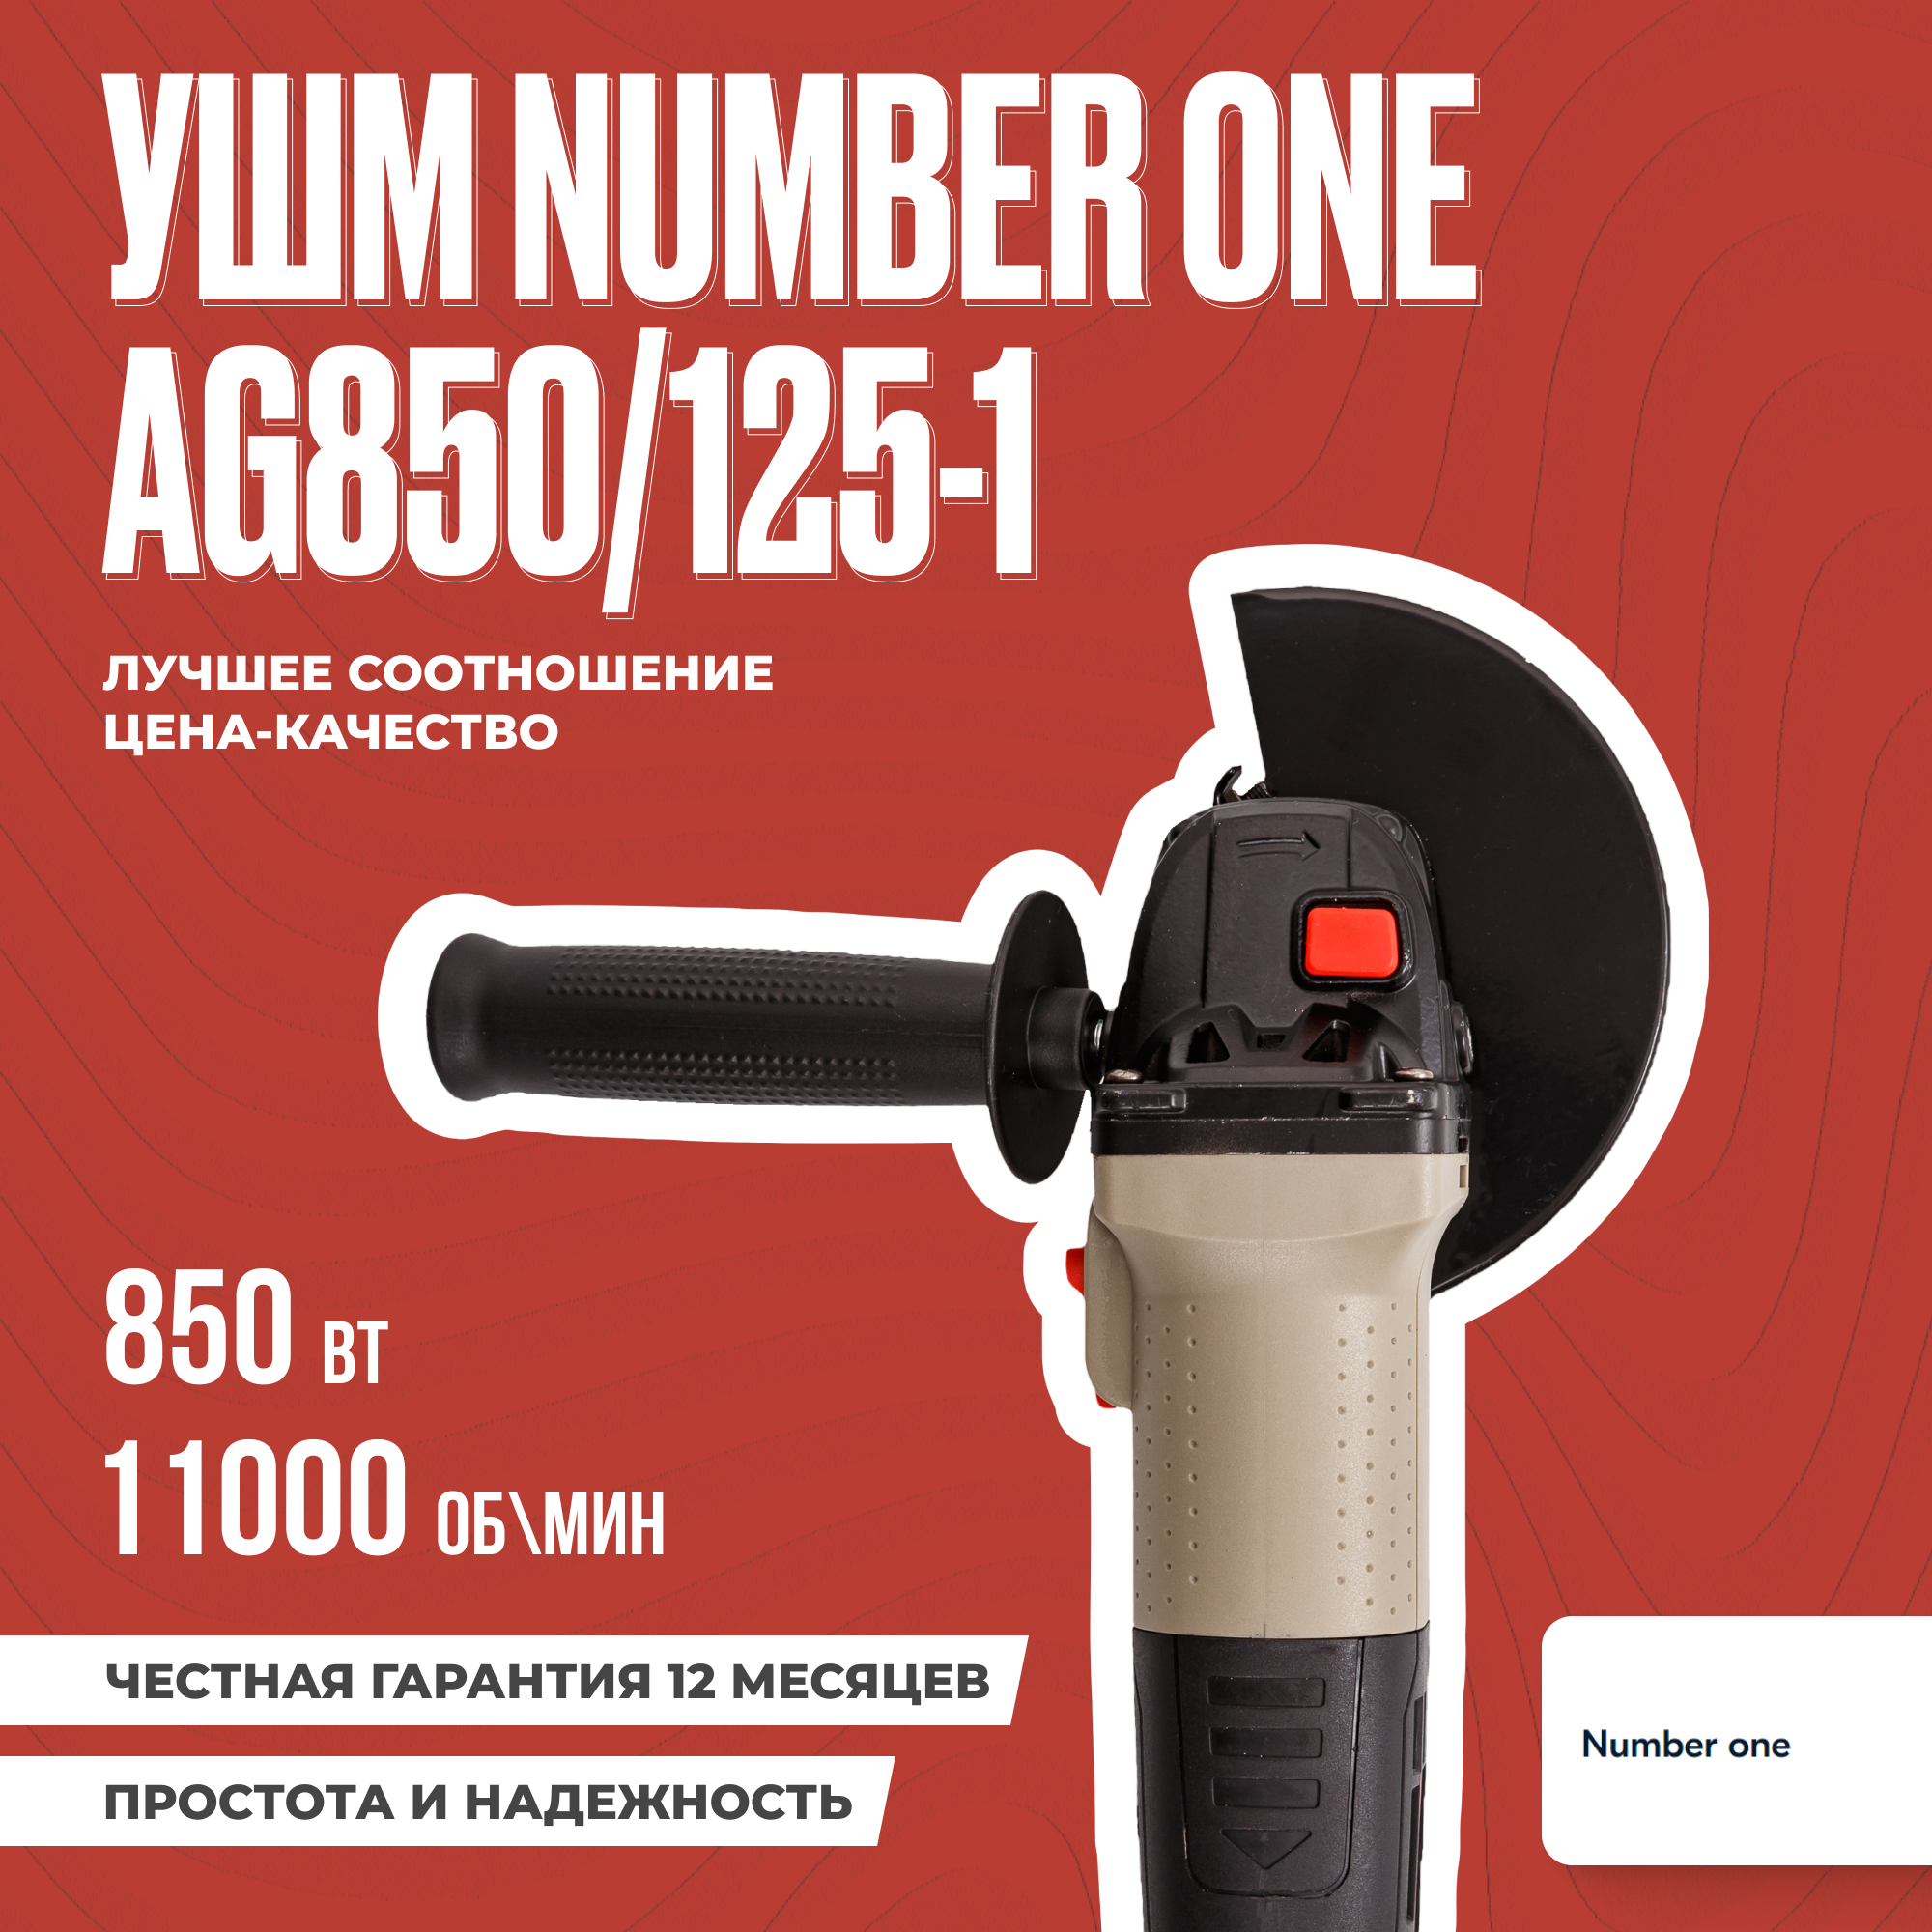 Шлифовальная машина (УШМ, Болгарка) NUMBER ONE AG850/125-1 125мм, 850Вт, длин.рукоят.